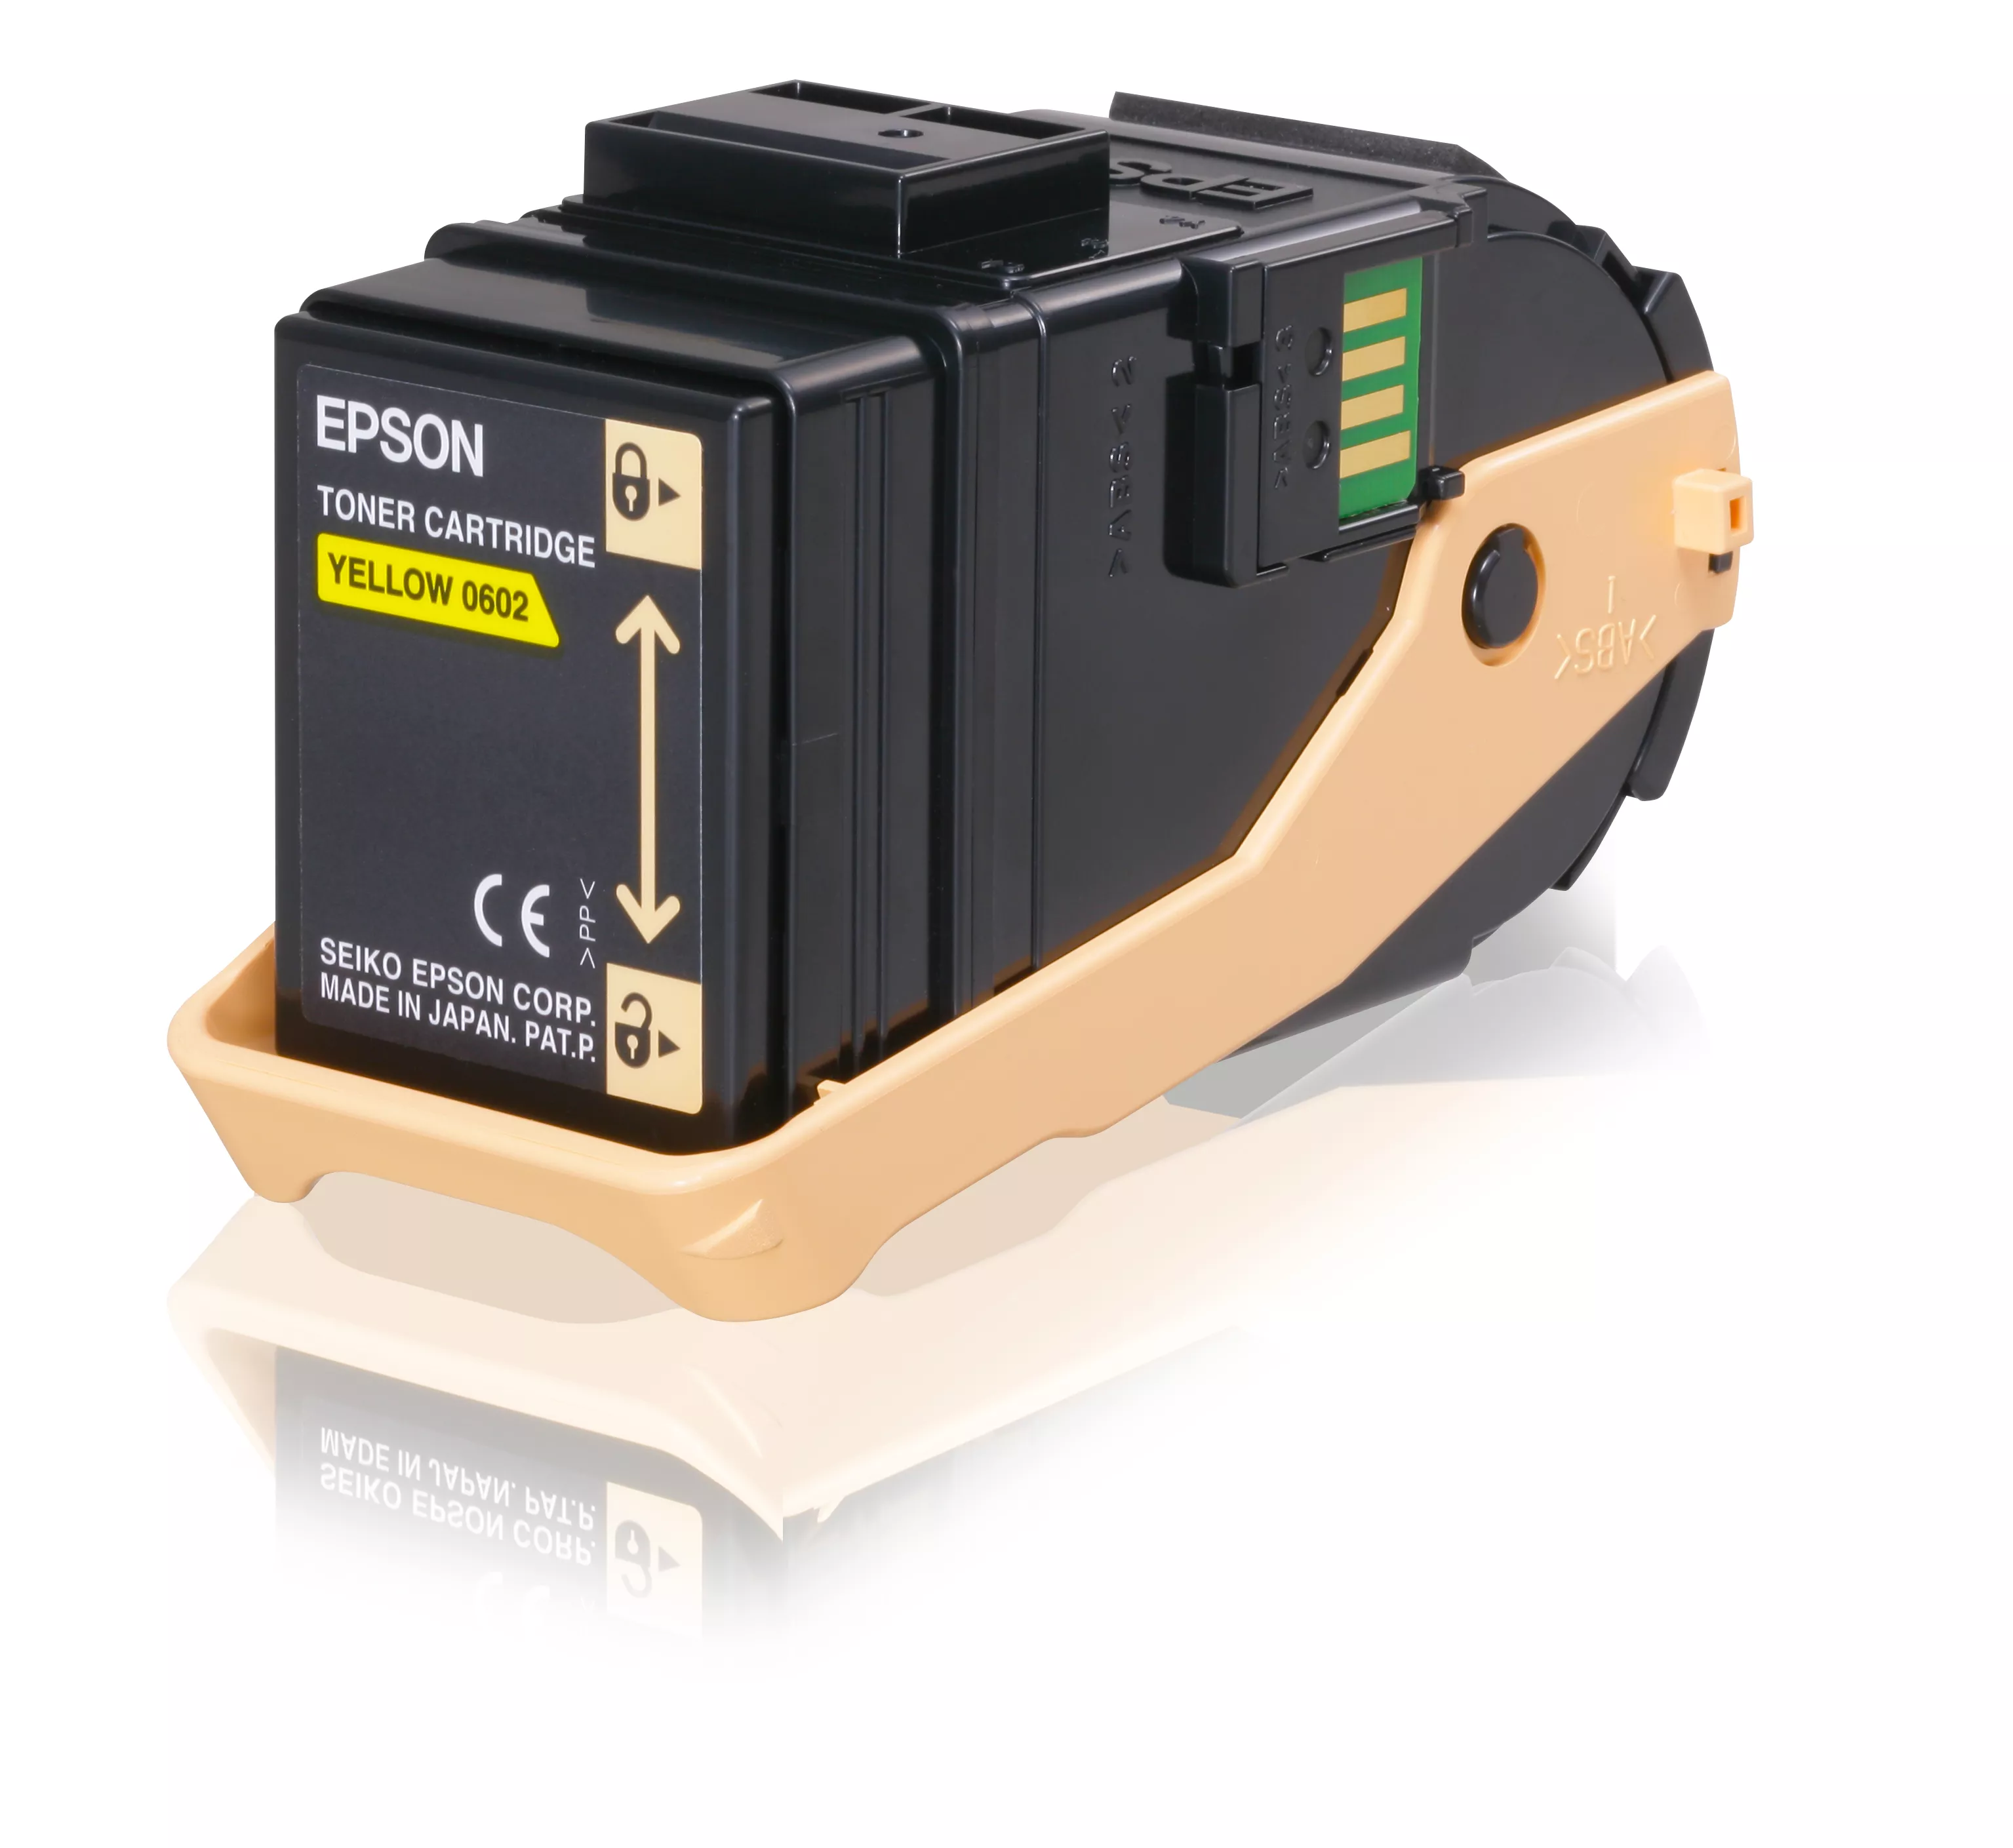 Vente Toner EPSON AL-C9300N cartouche de toner jaune capacité